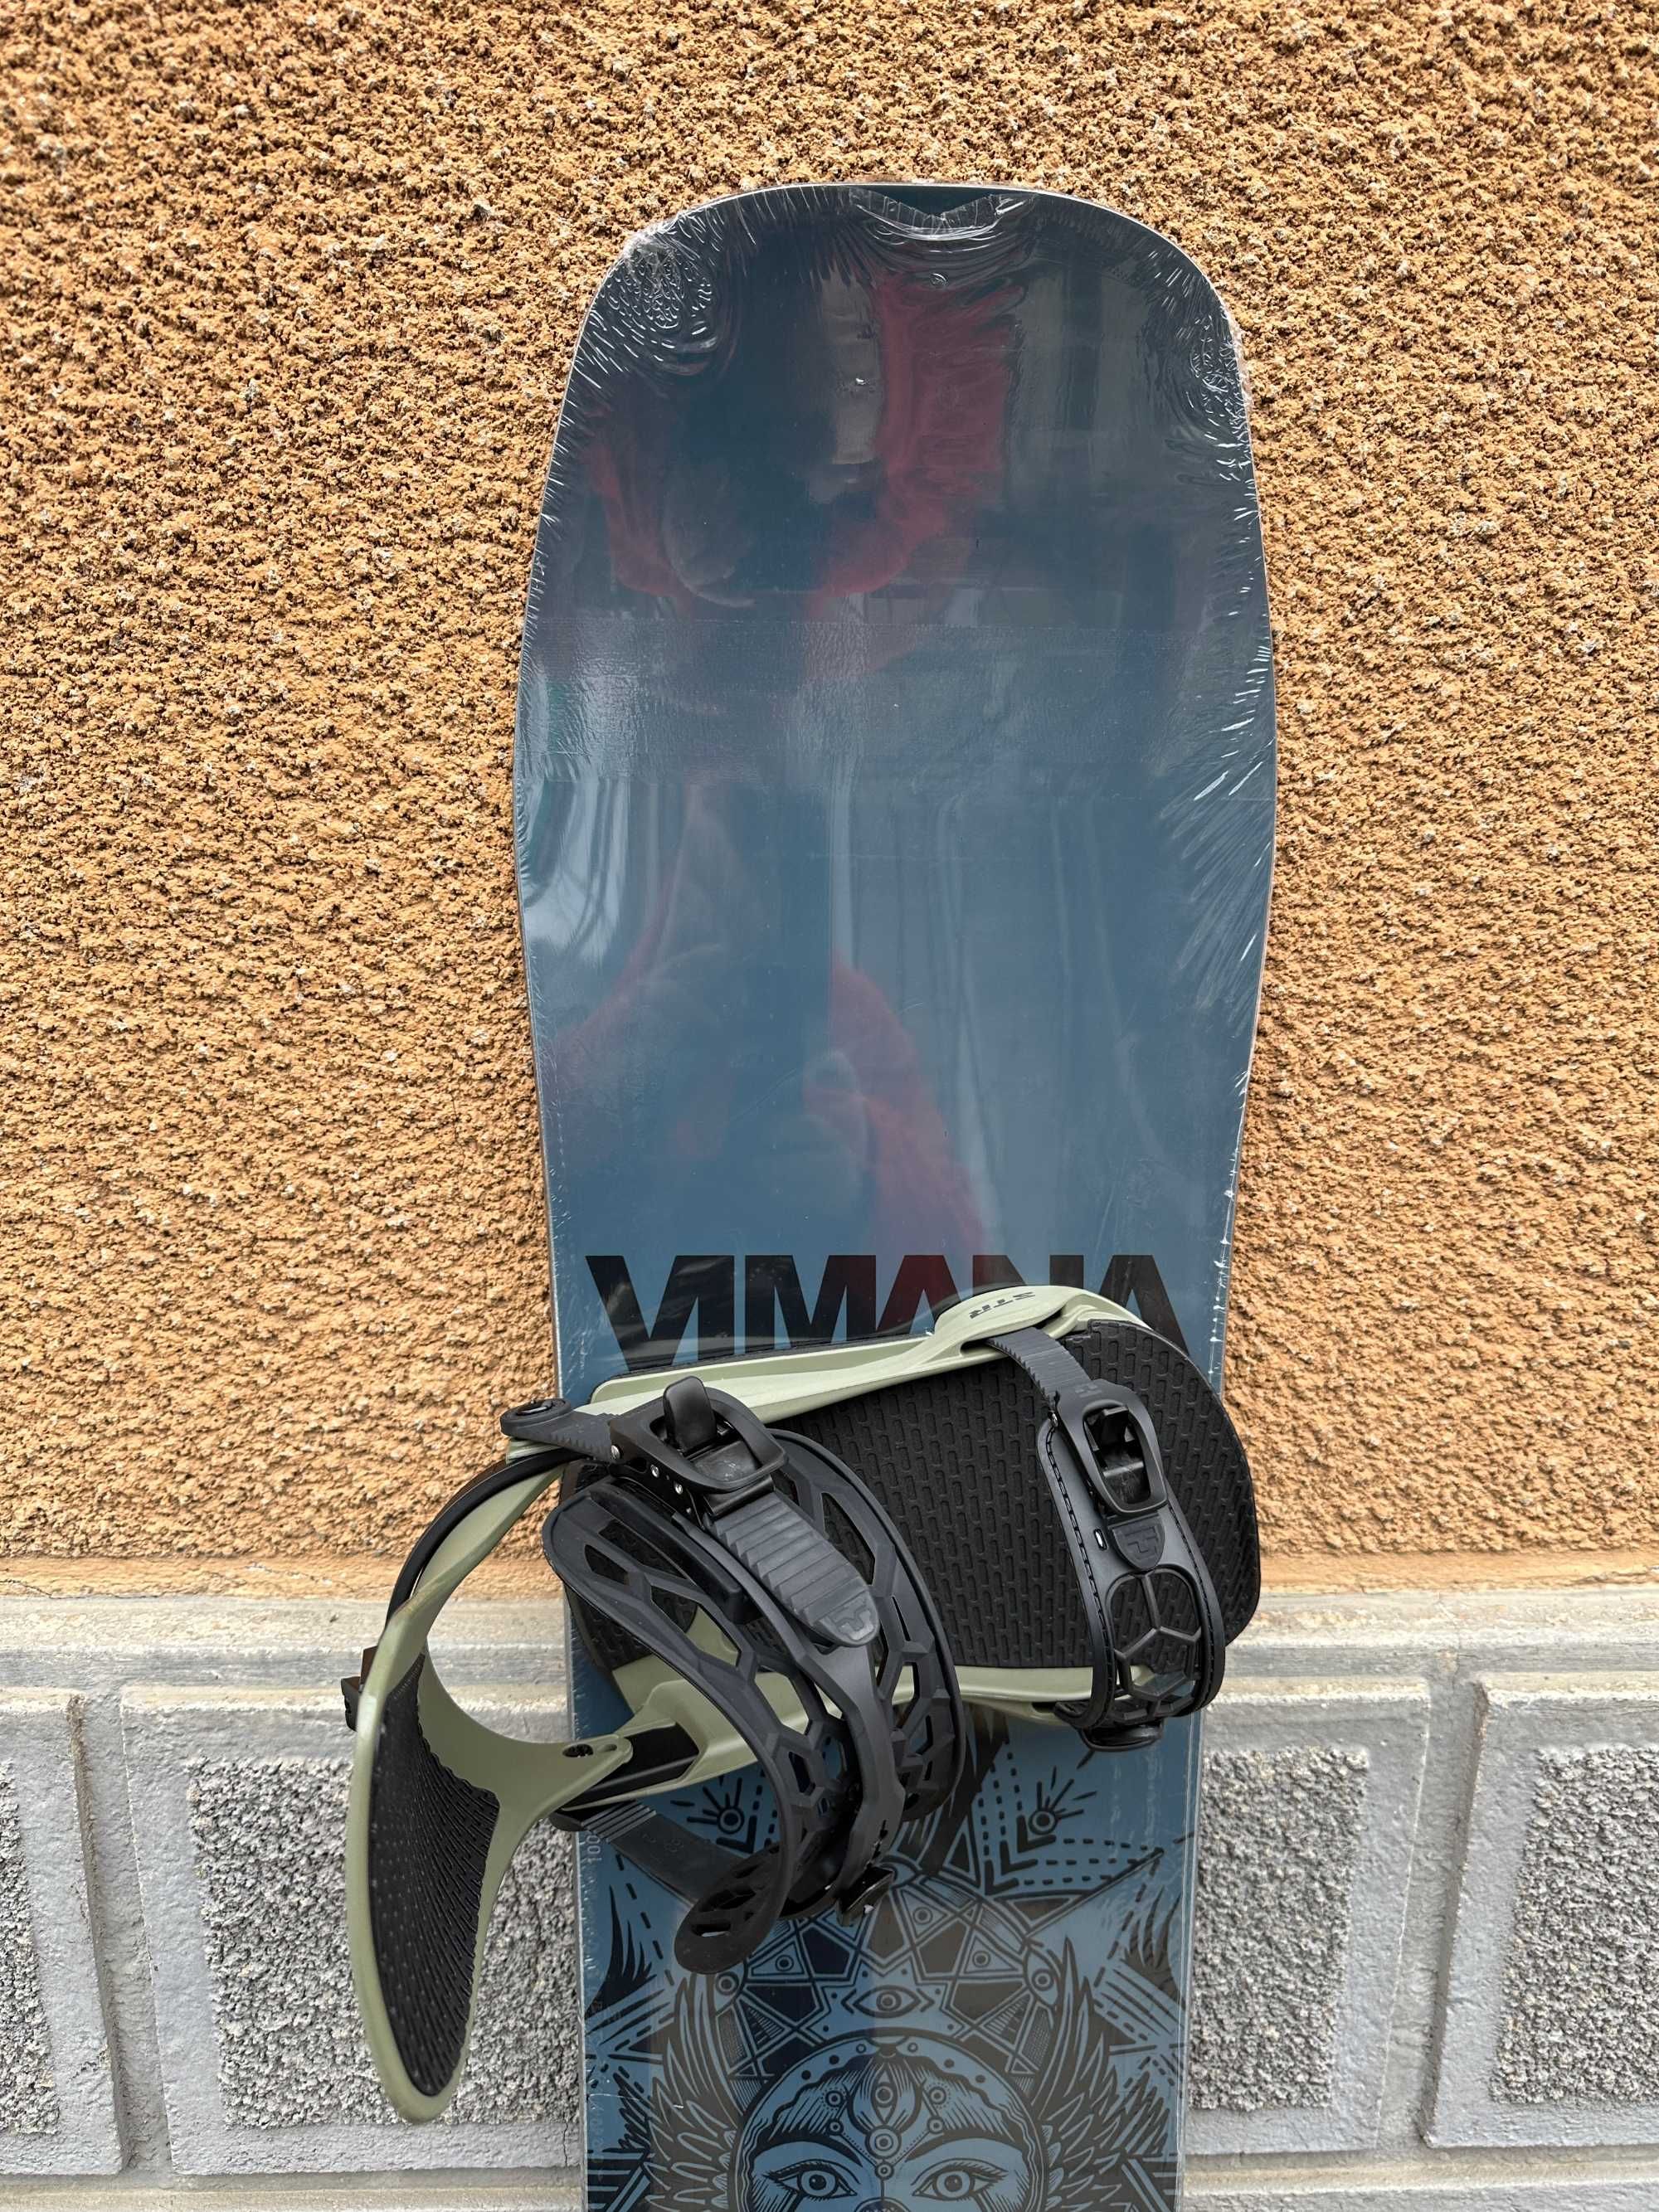 placa noua snowboard vimana the meta L156cm